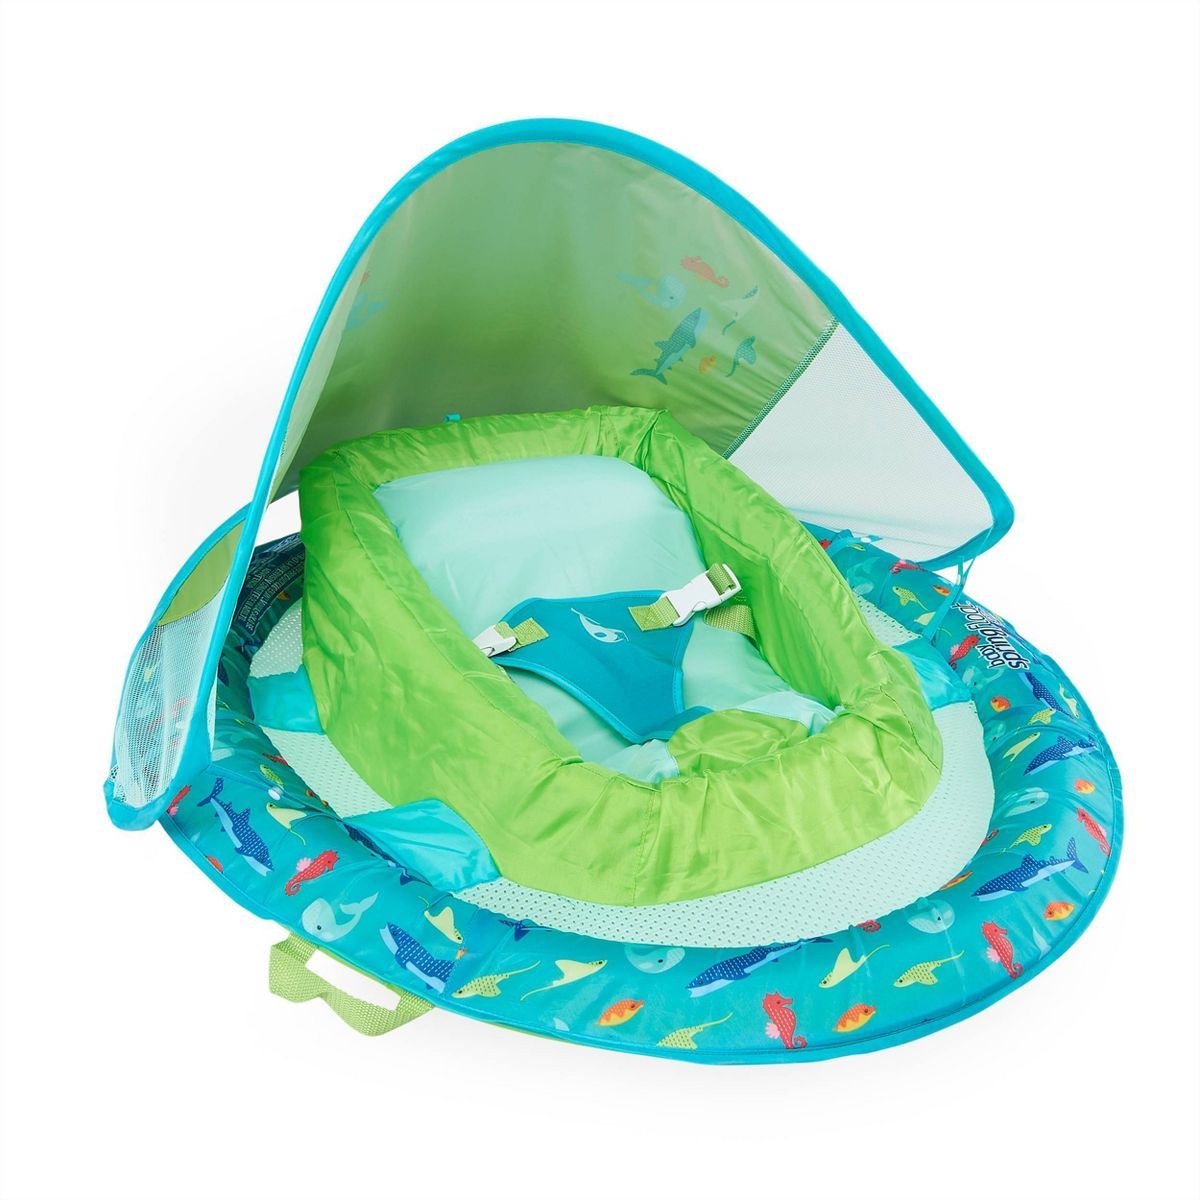 Swimways Infant Baby Spring Float - Green | Target